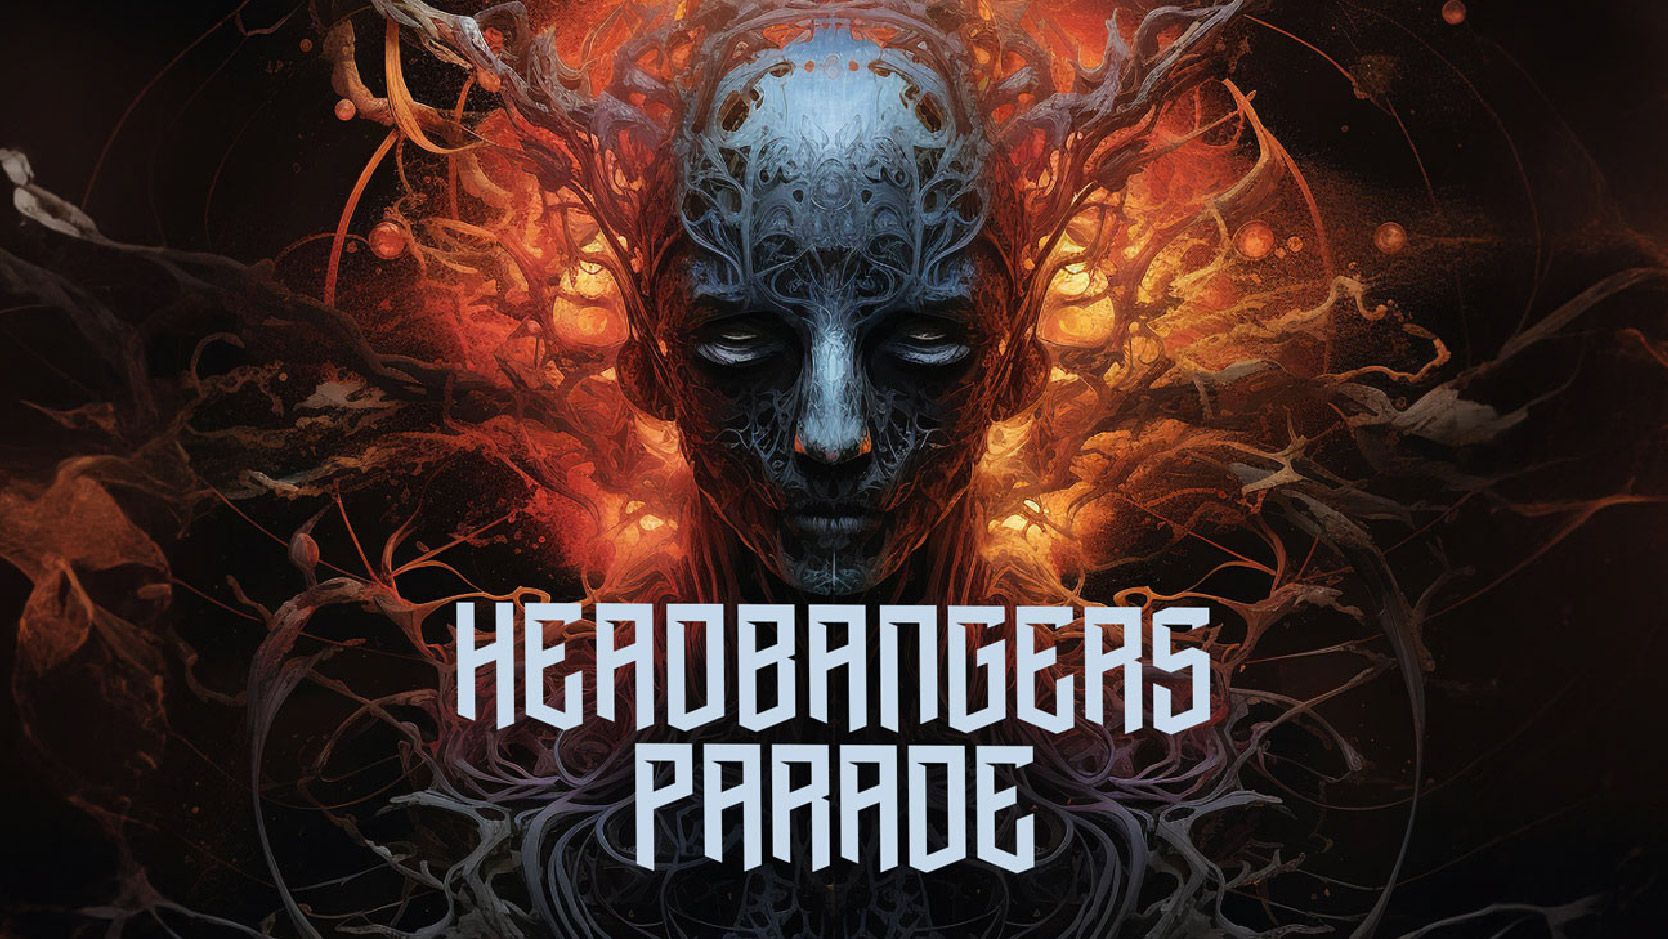 Headbangers Parade cover